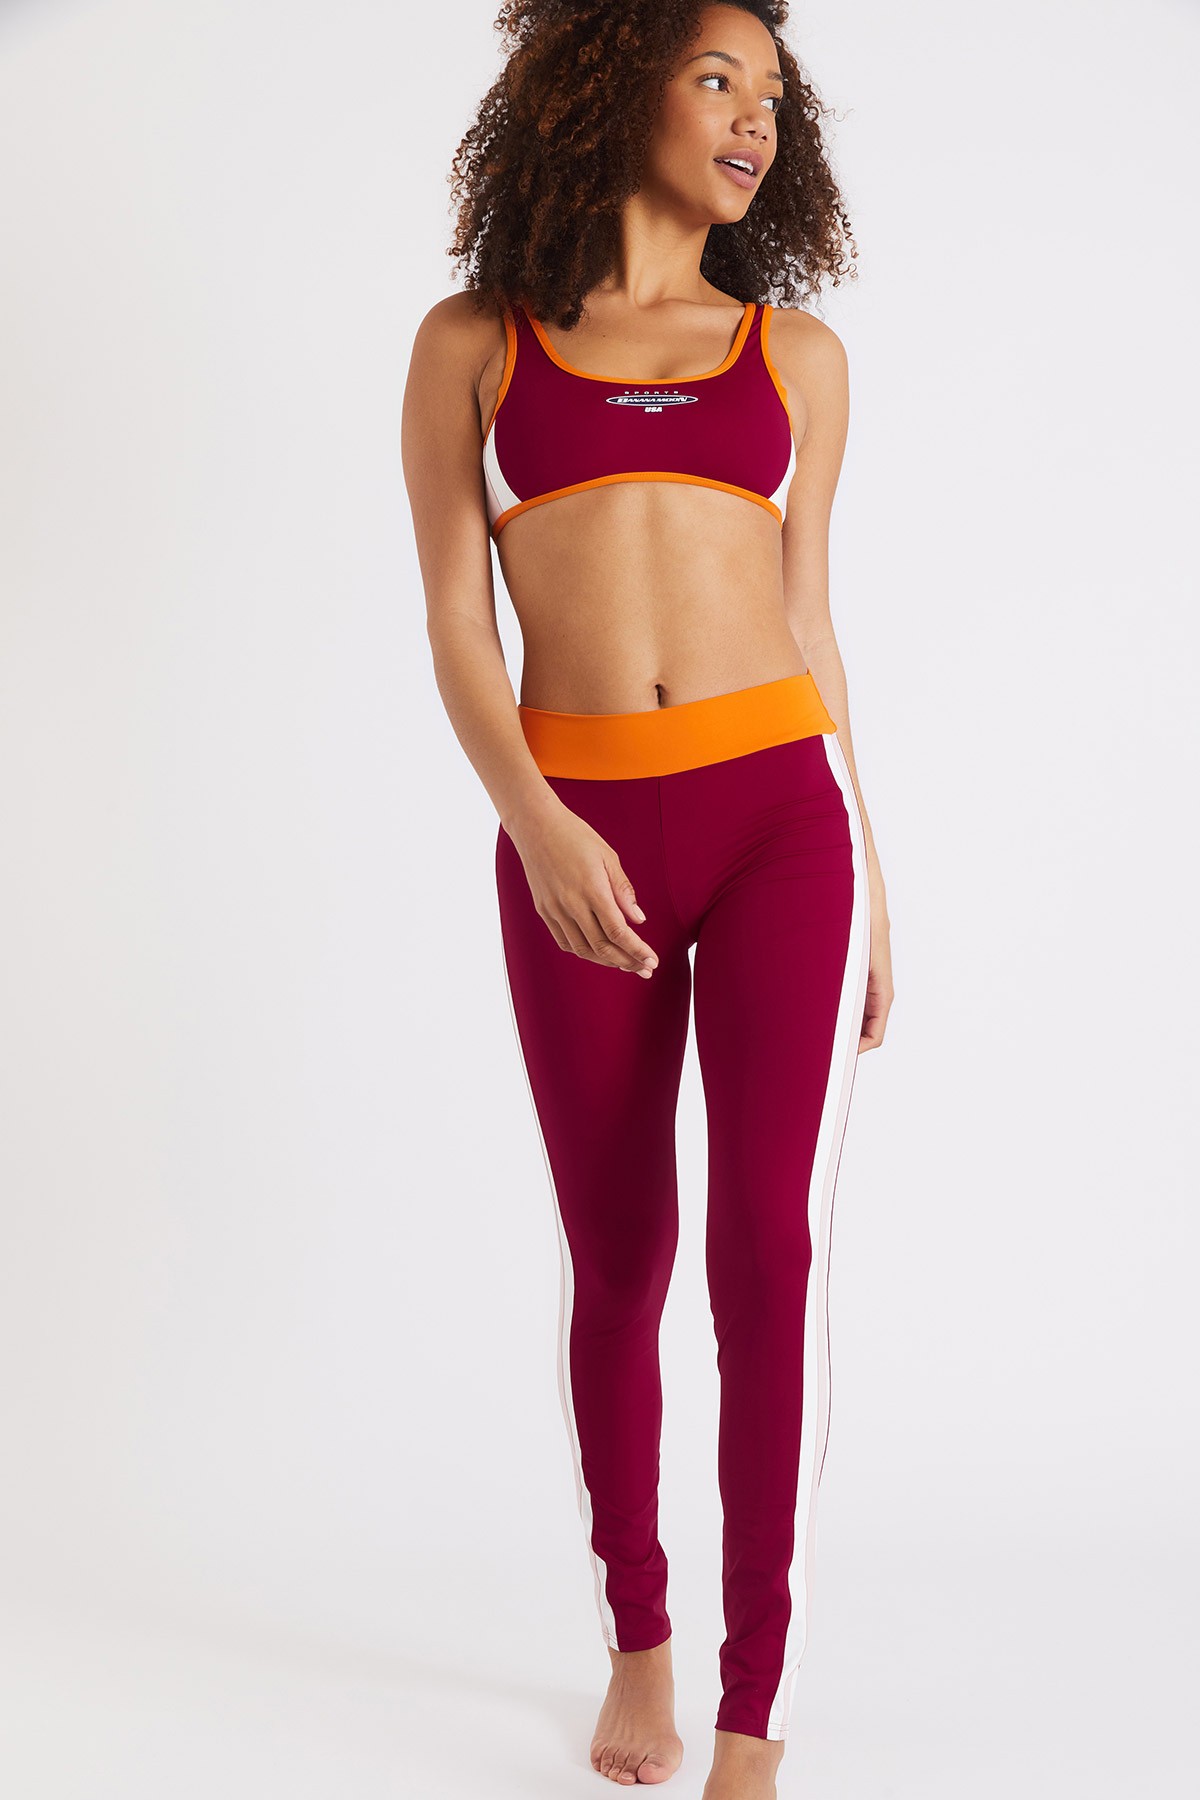 Gym Sprint burgundy sports legging